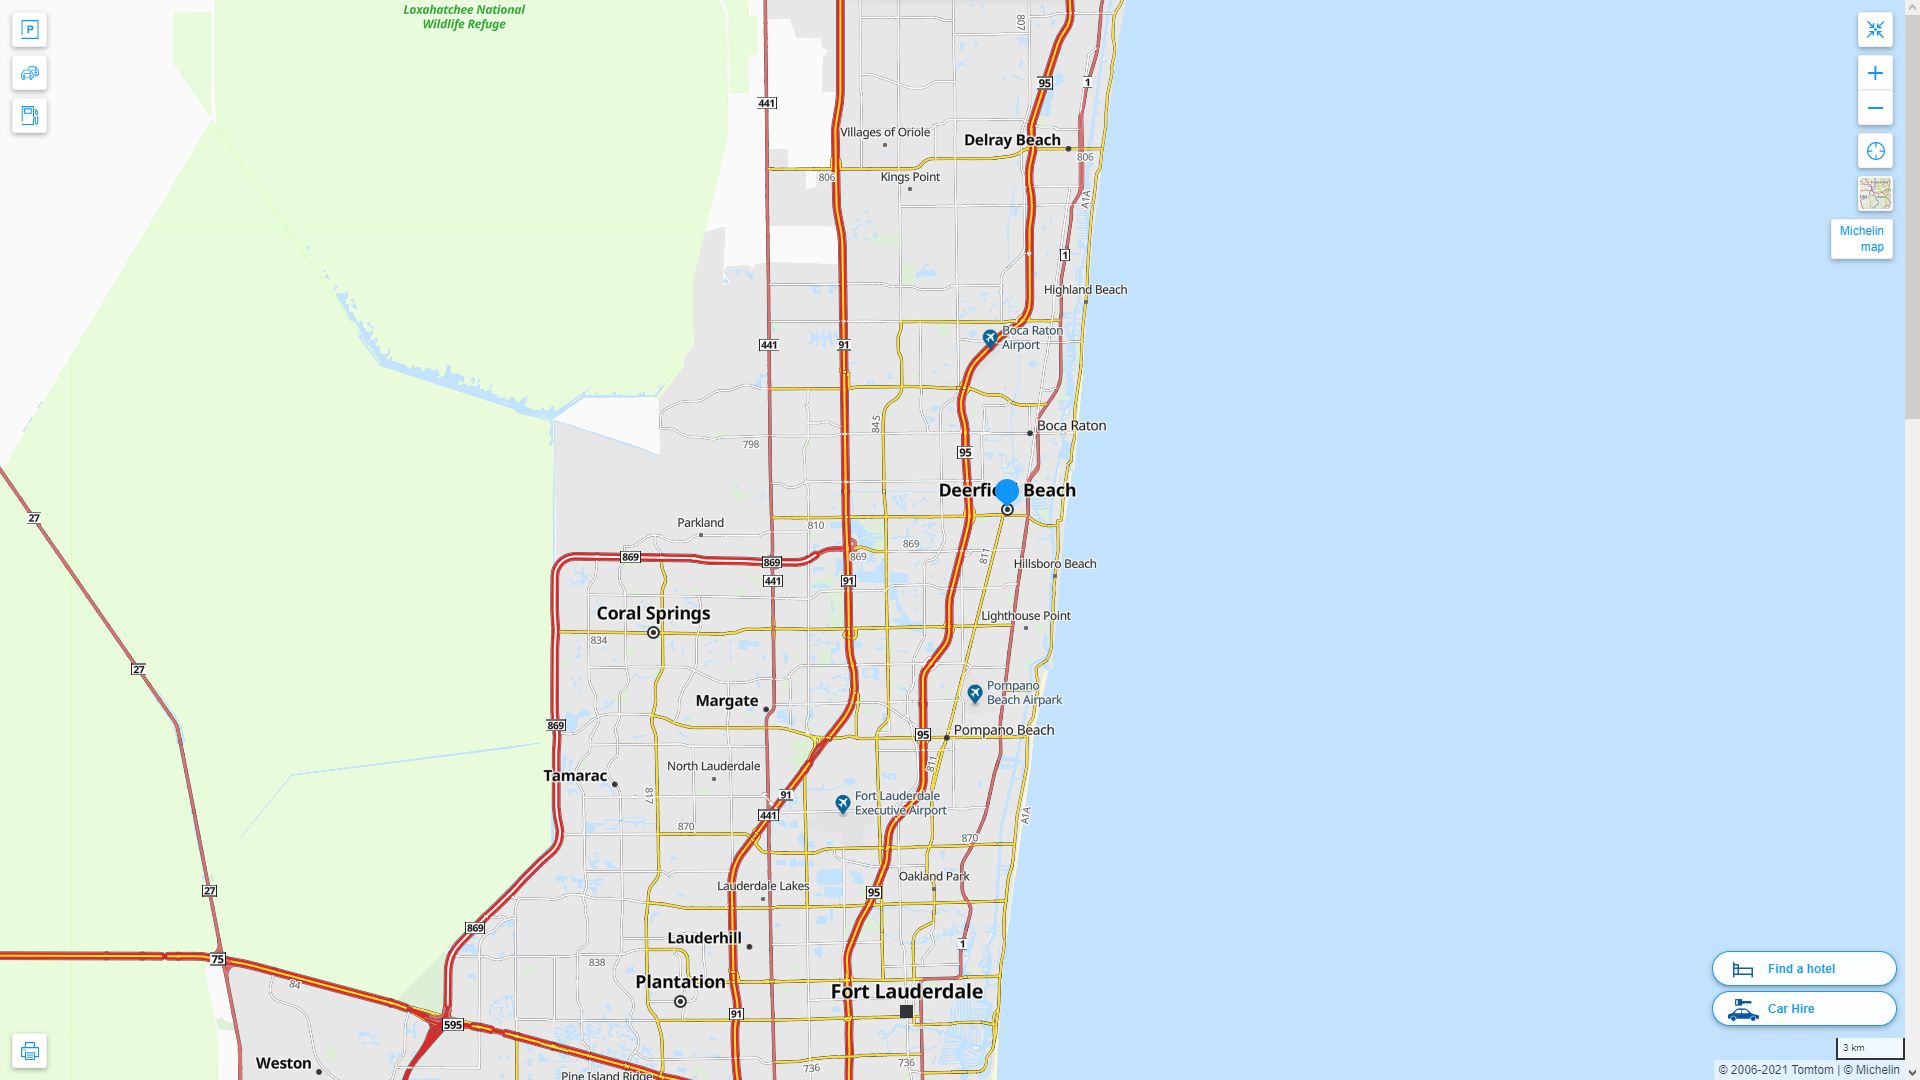 Deerfield Beach Florida Highway and Road Map